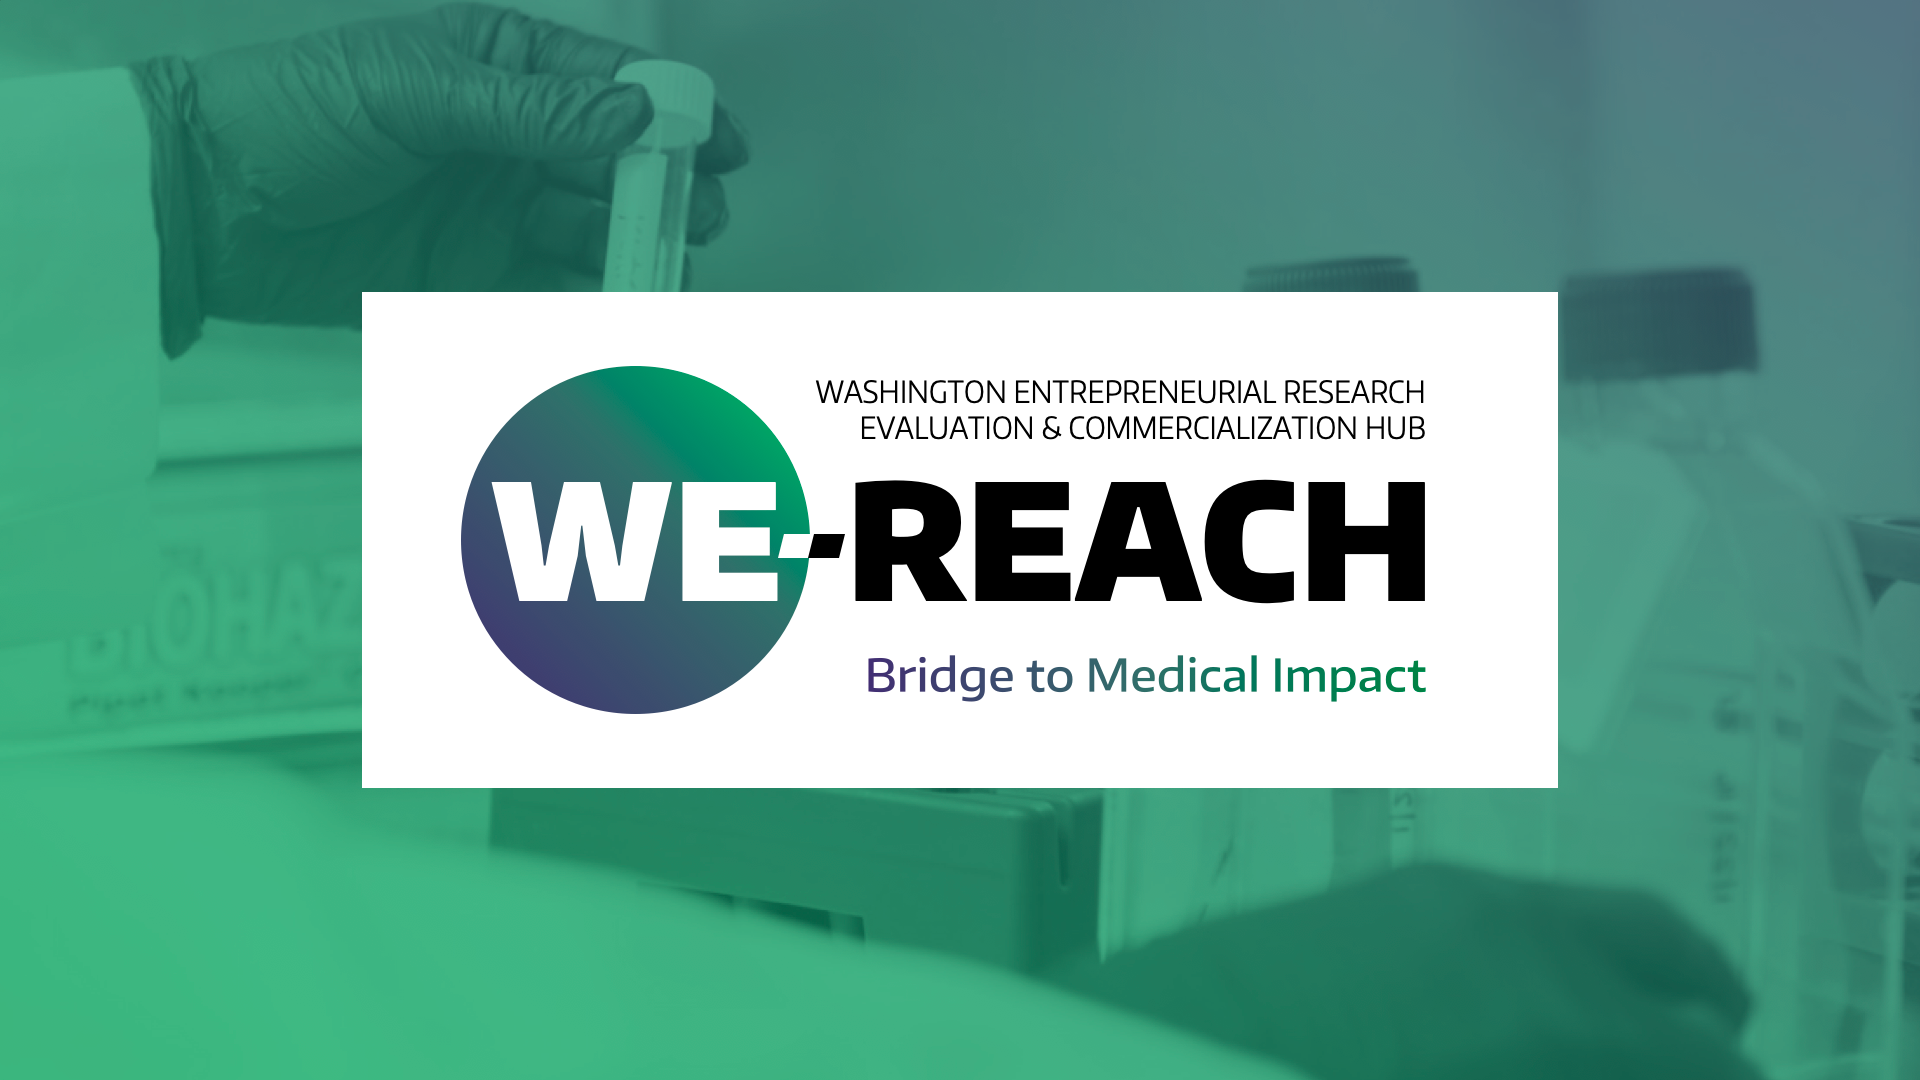 Introducing WE-REACH, a new biomedical innovation hub